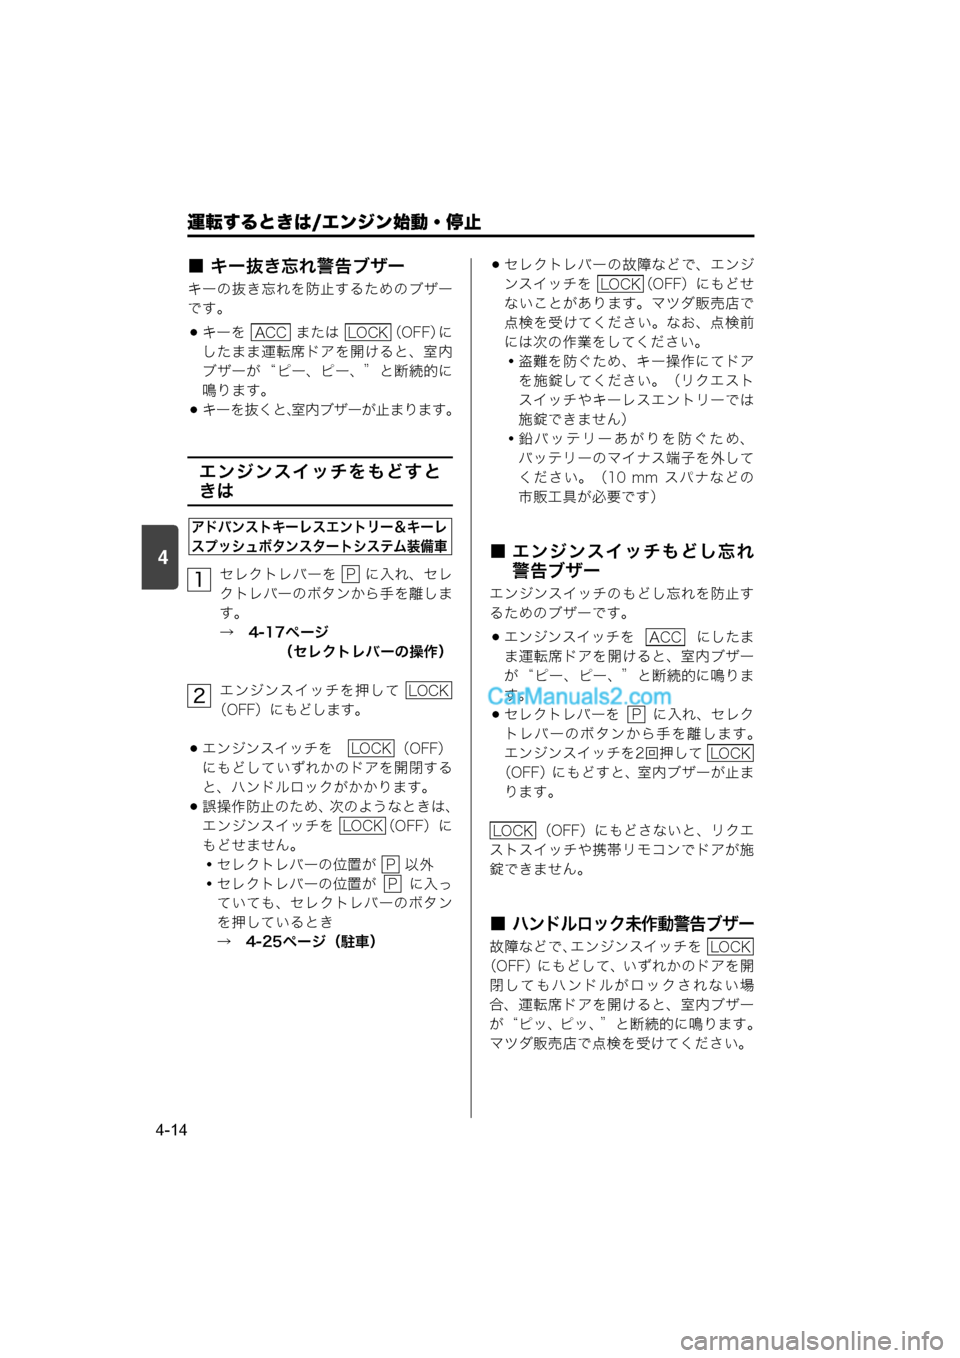 MAZDA MODEL CARROL 2015  取扱説明書 (キャロル) (in Japanese) 4
運転するときは/エンジン始動・停止
4-14
■ キー抜き忘れ警告ブザー
キーの抜き忘れを防止するためのブザー
です。
キーを   または  （OFF）に
�